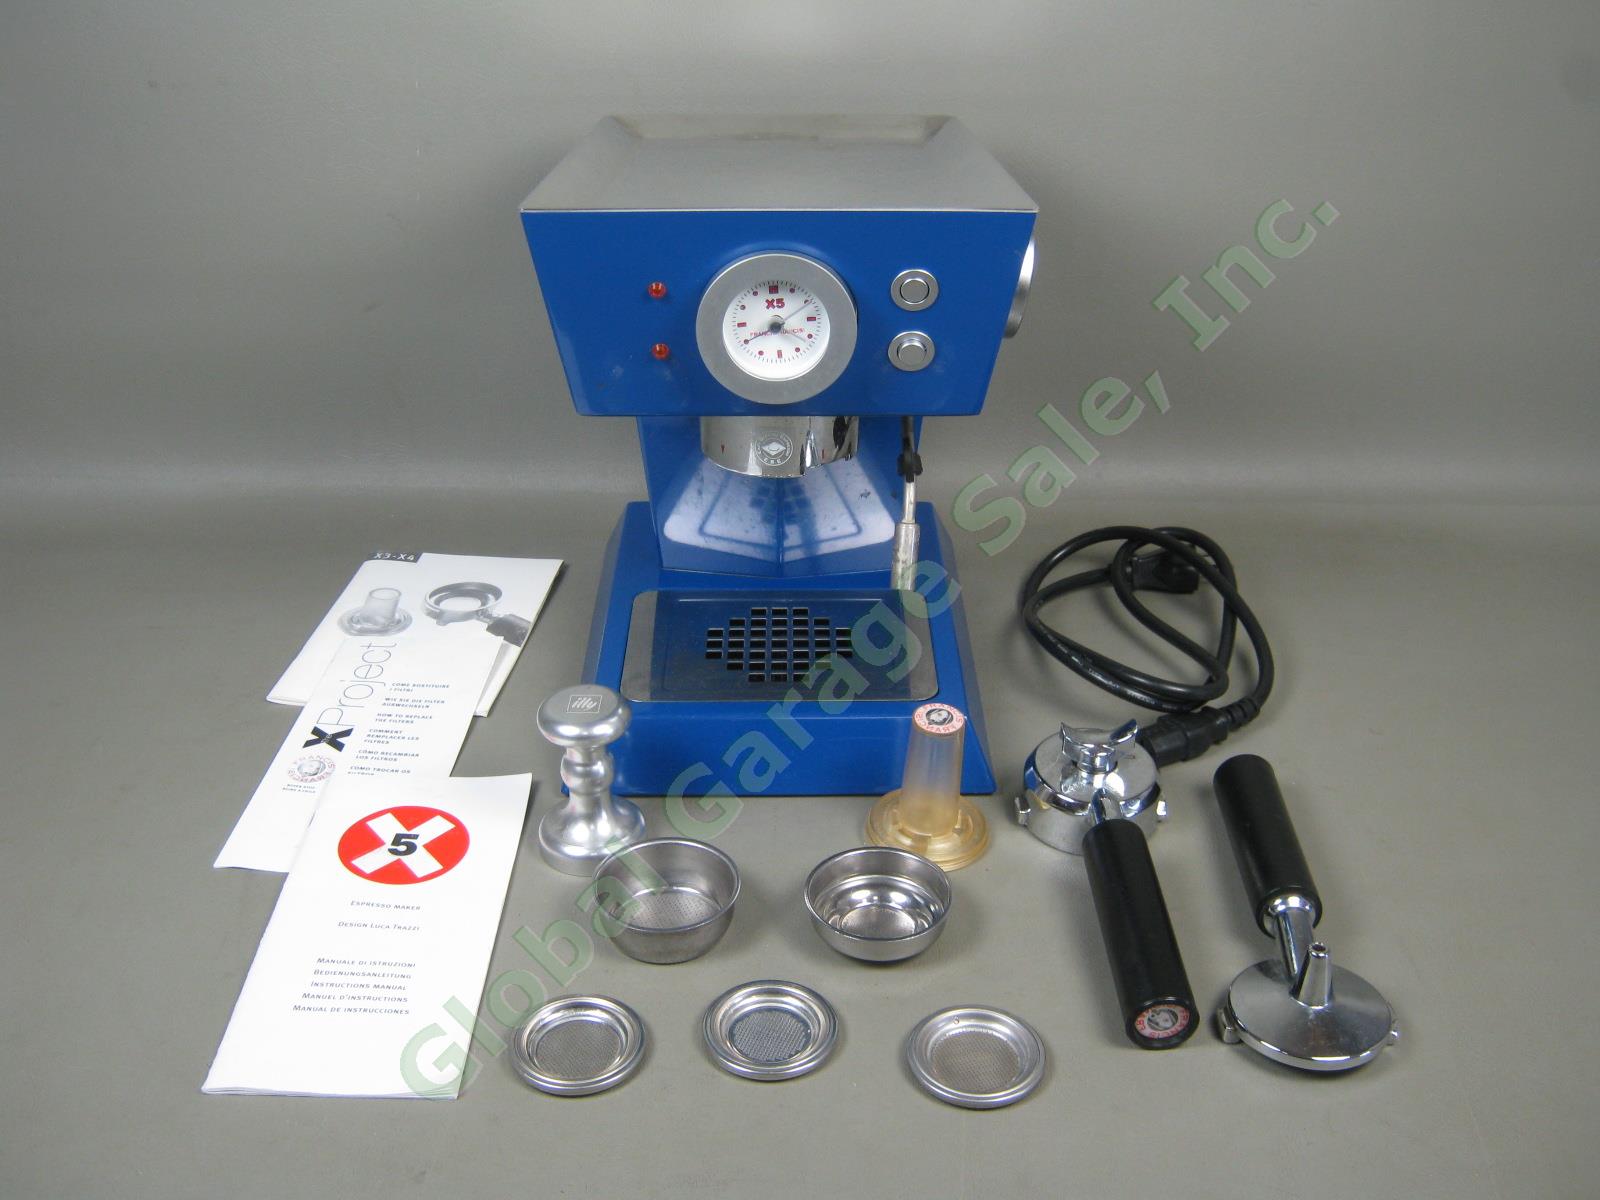 Royal Blue Francis X5 Espresso Maker Machine Tested Works Luca Trazzi Design NR!